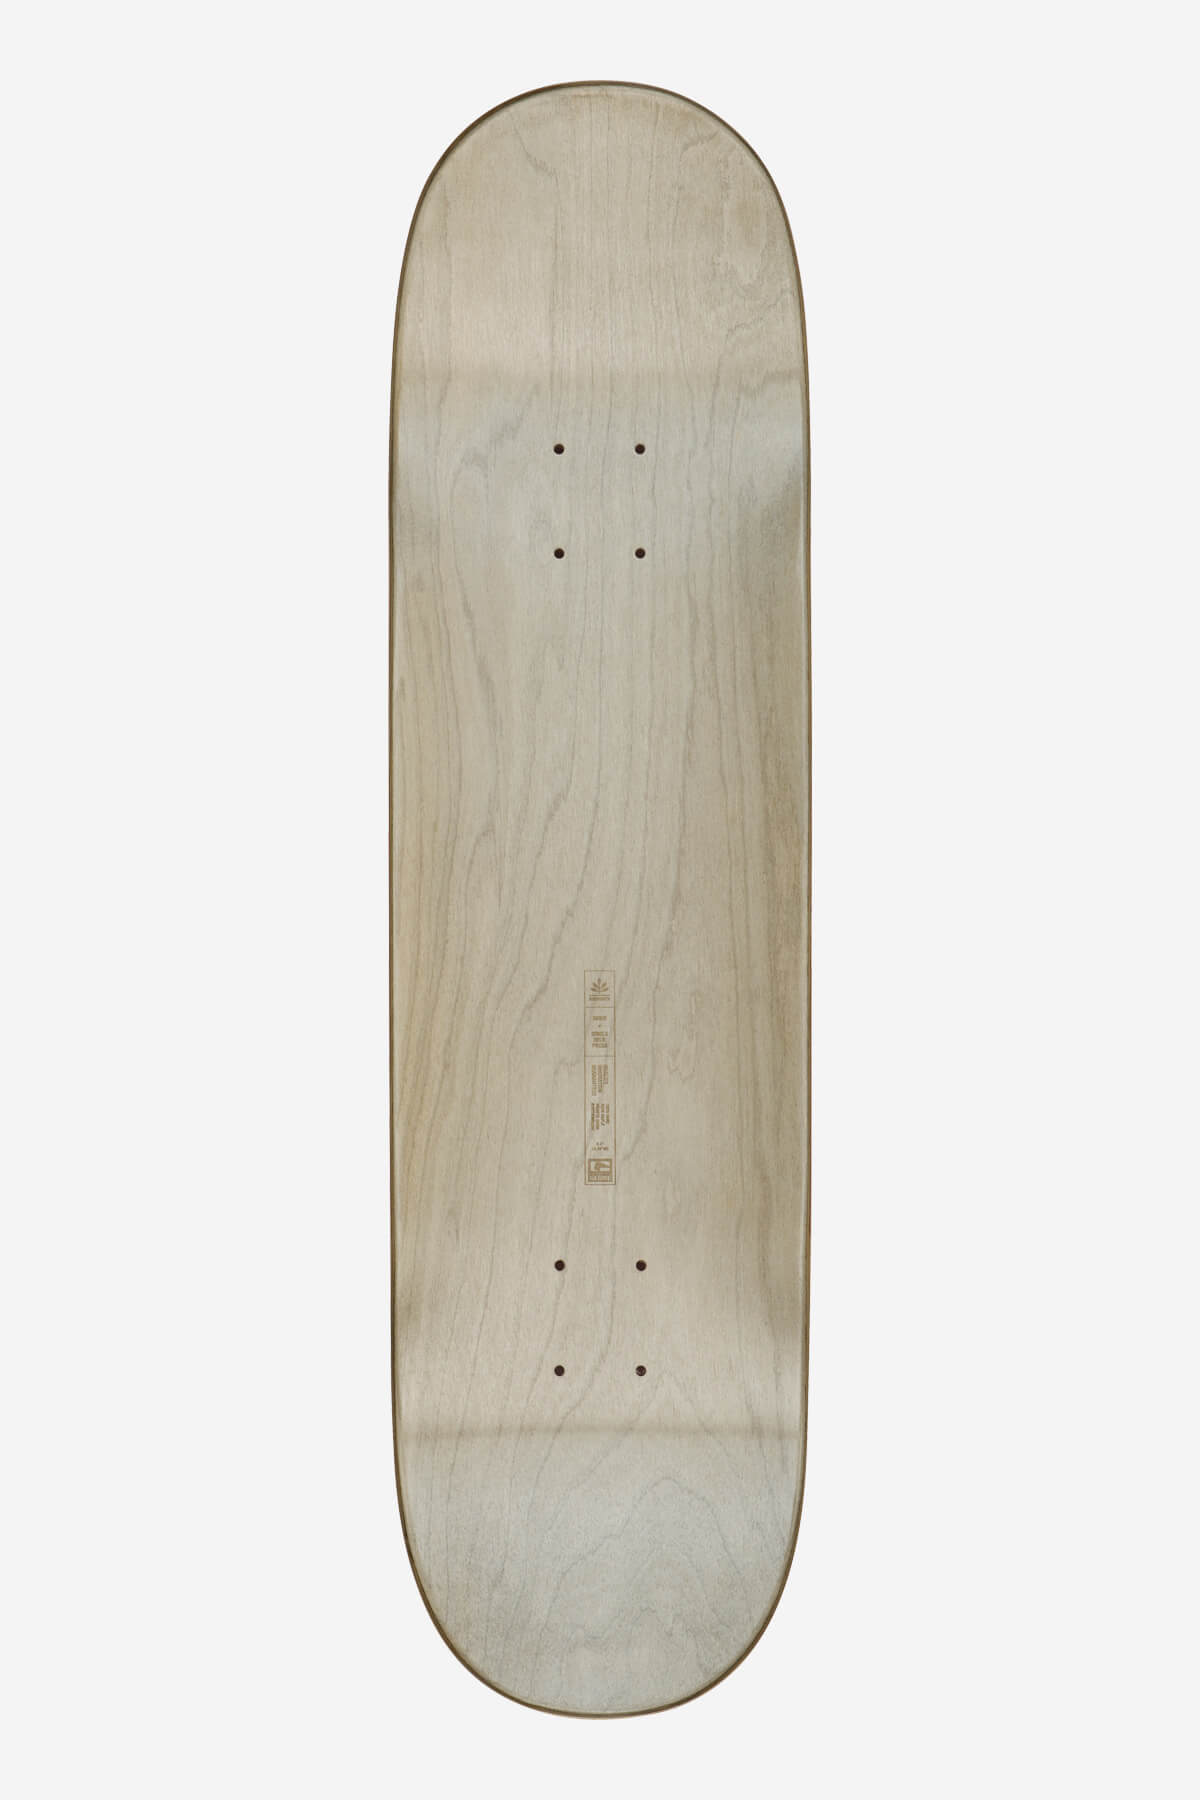 Globe - Goodstock - Ruby - 8.5" Skateboard Deck